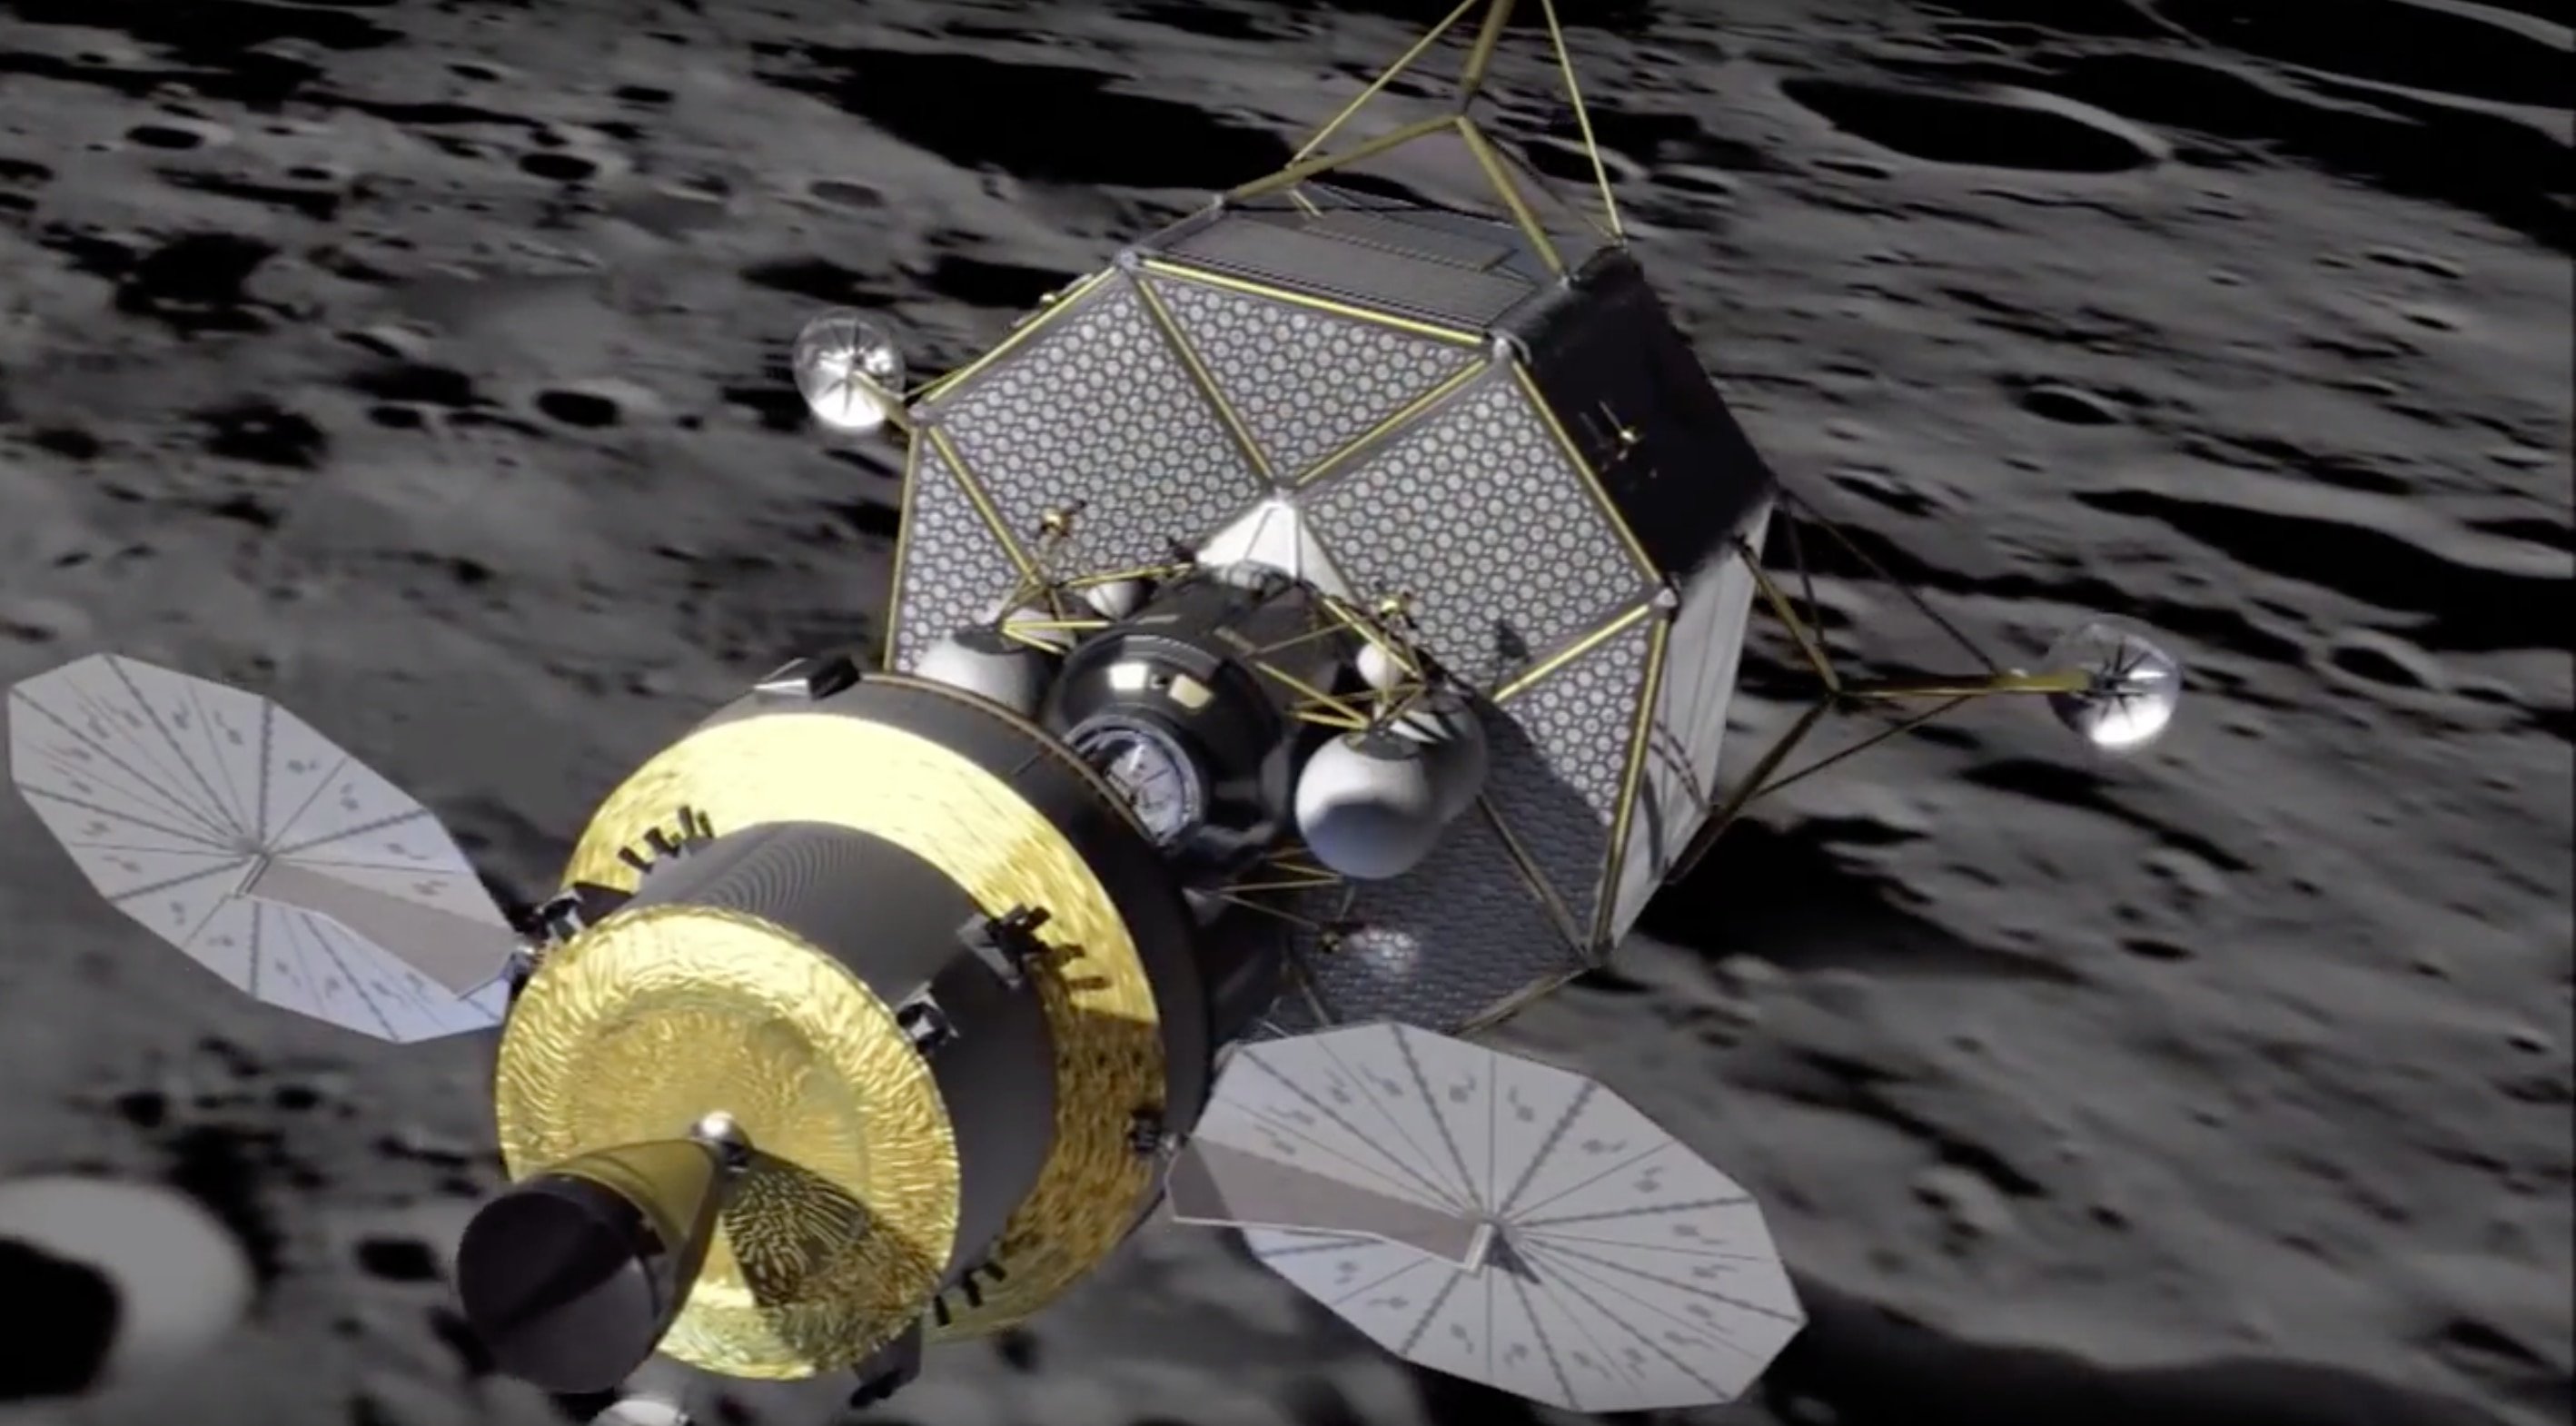 NASA image of asteroid mining